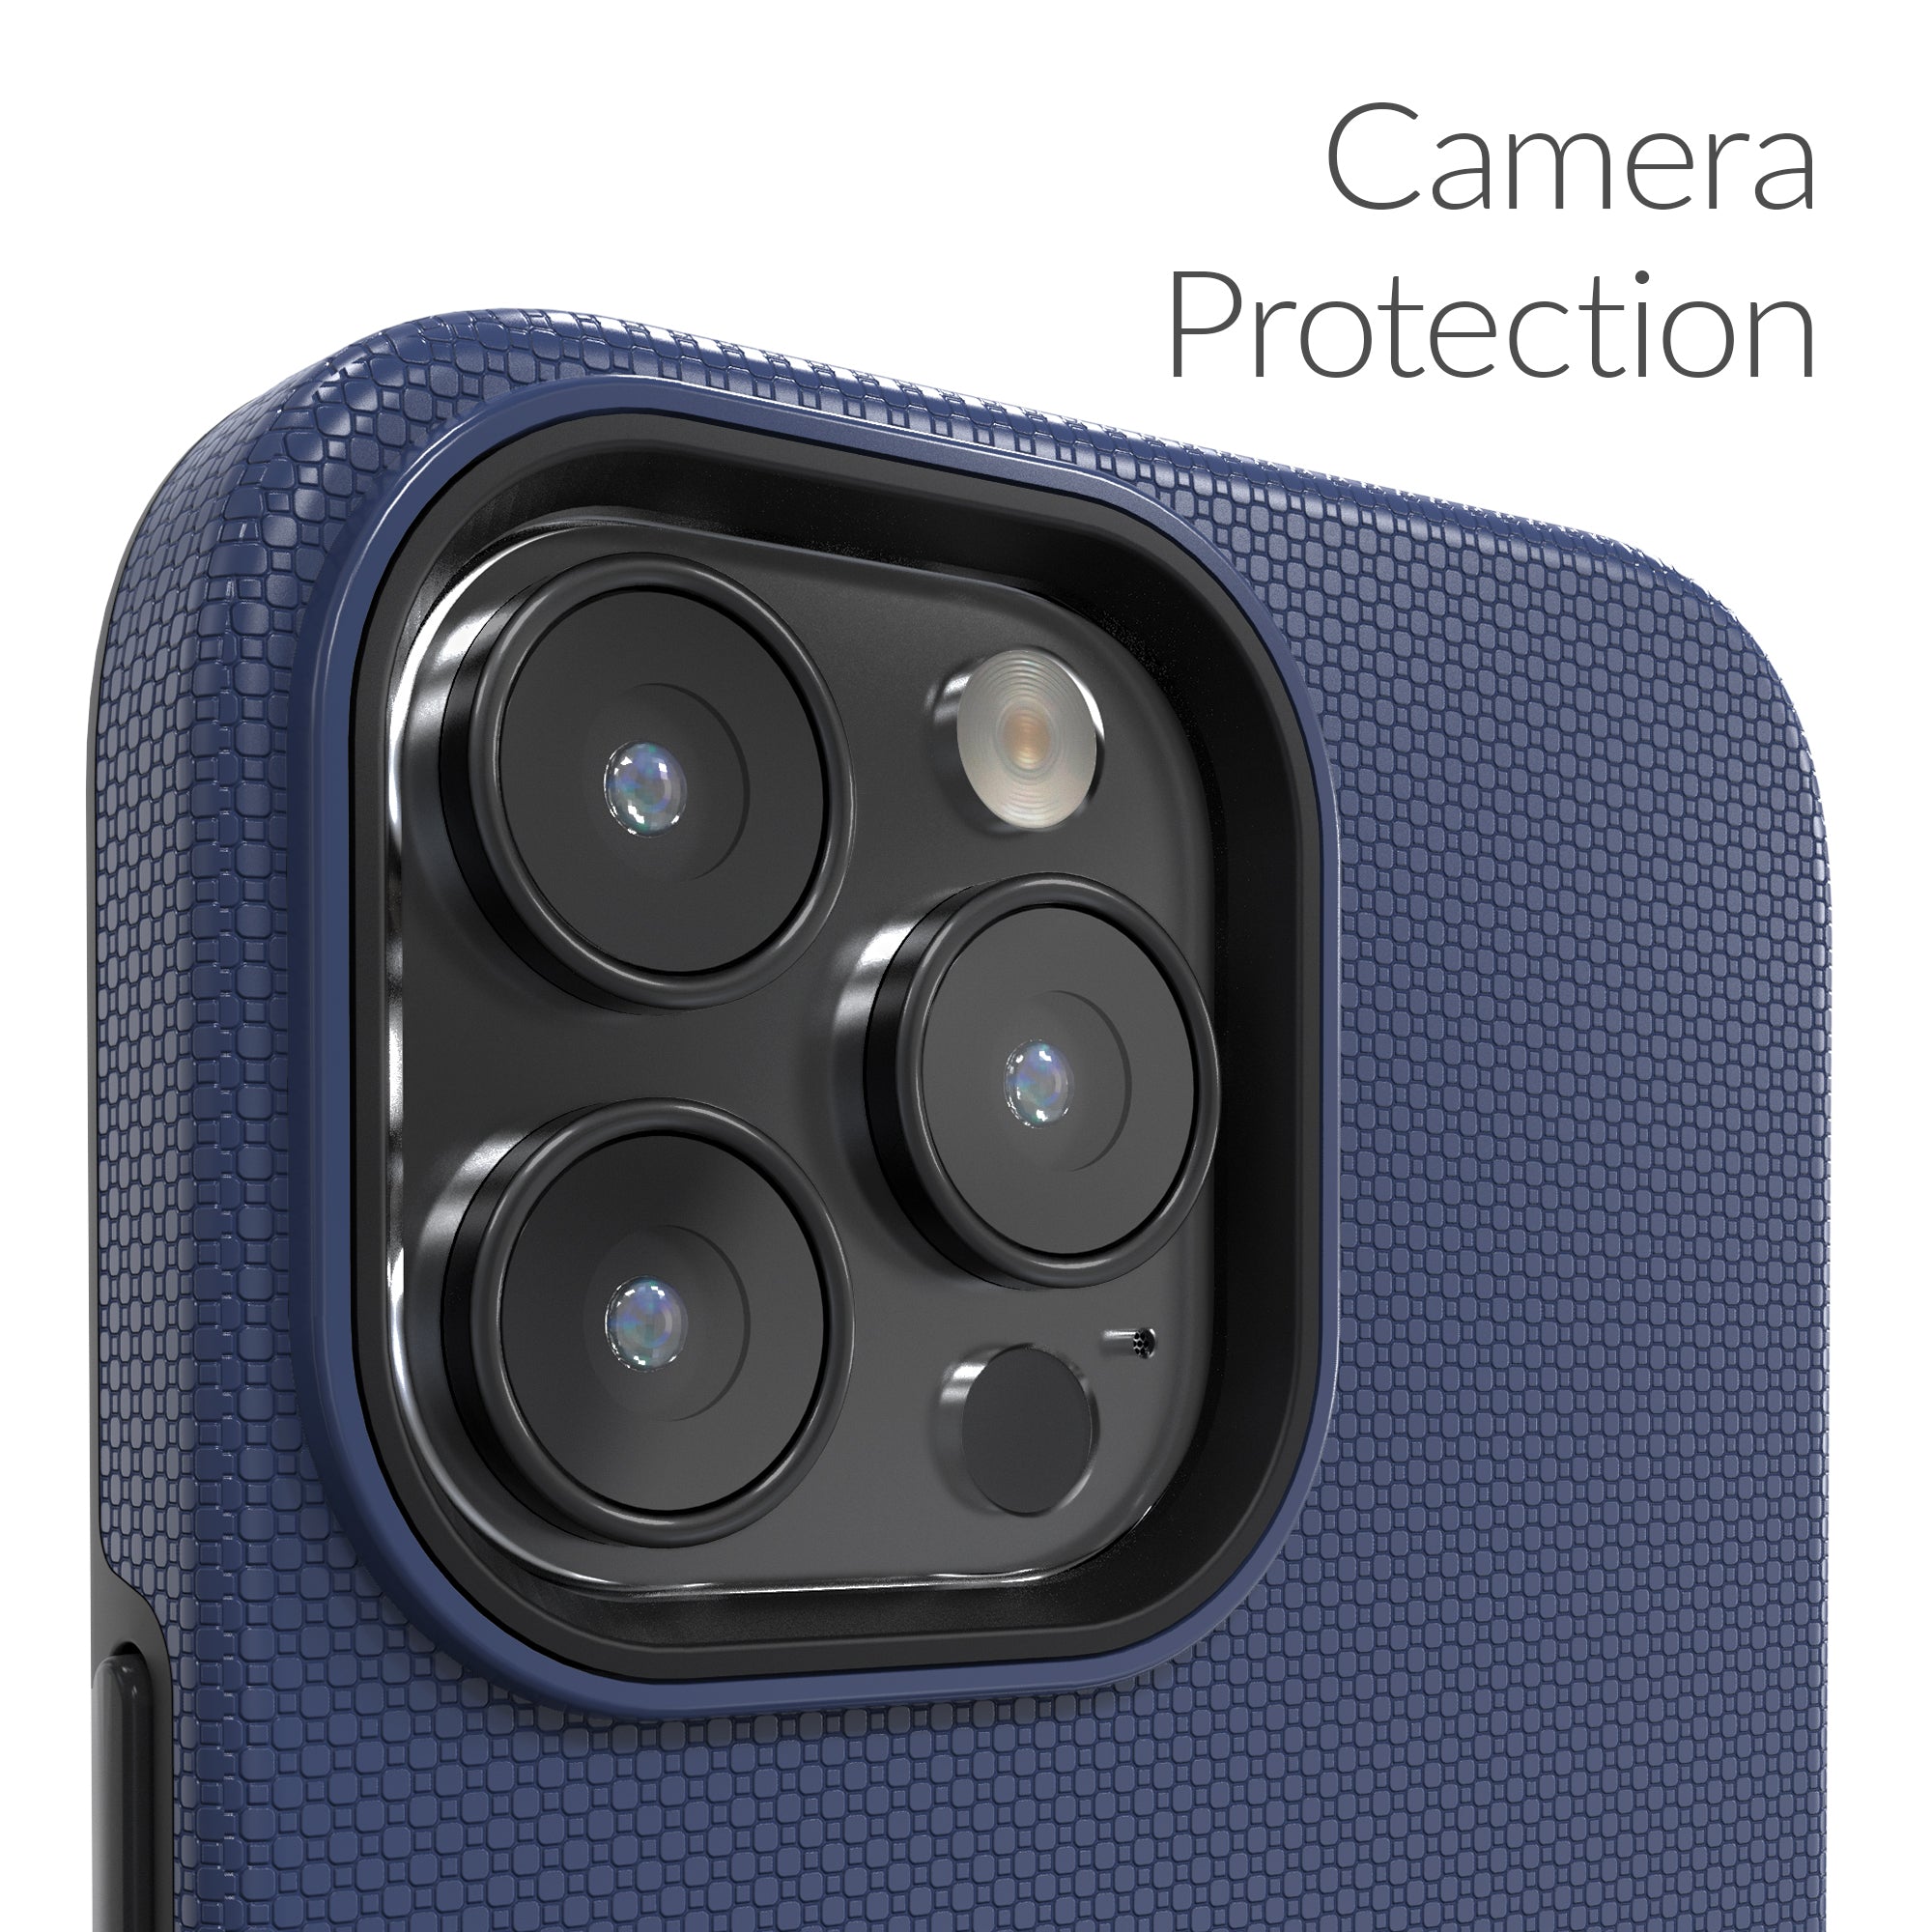 iPhone 14 Pro Max Case Dual Guard